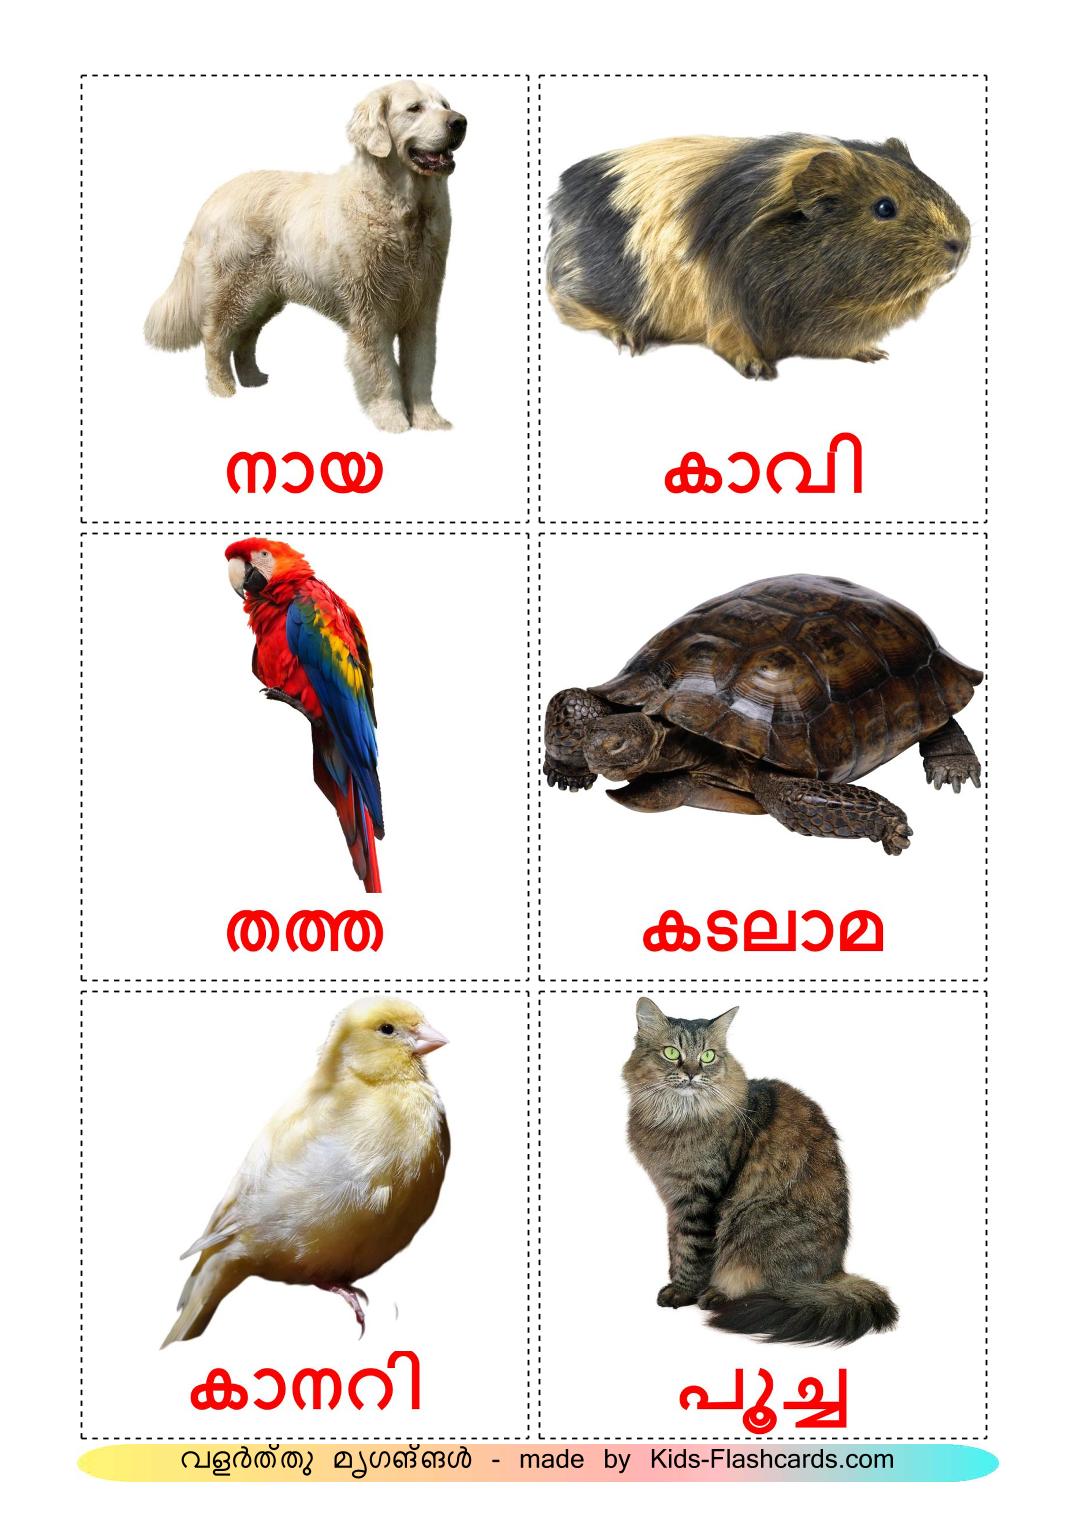 Les animaux Domestiques - 10 Flashcards malayalam imprimables gratuitement